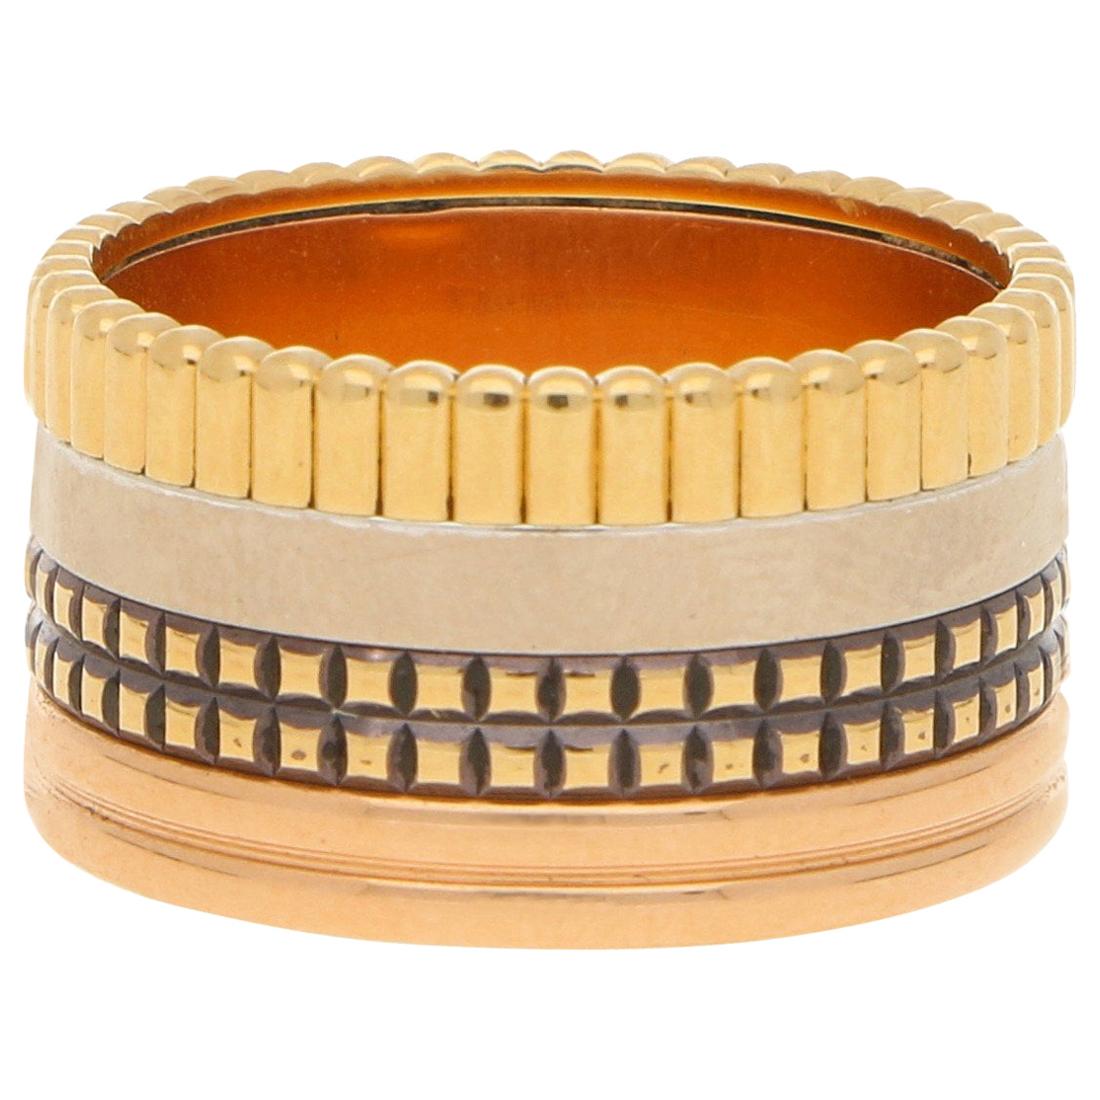 Boucheron Paris "Quatre Classique" Ring in Mixed Gold